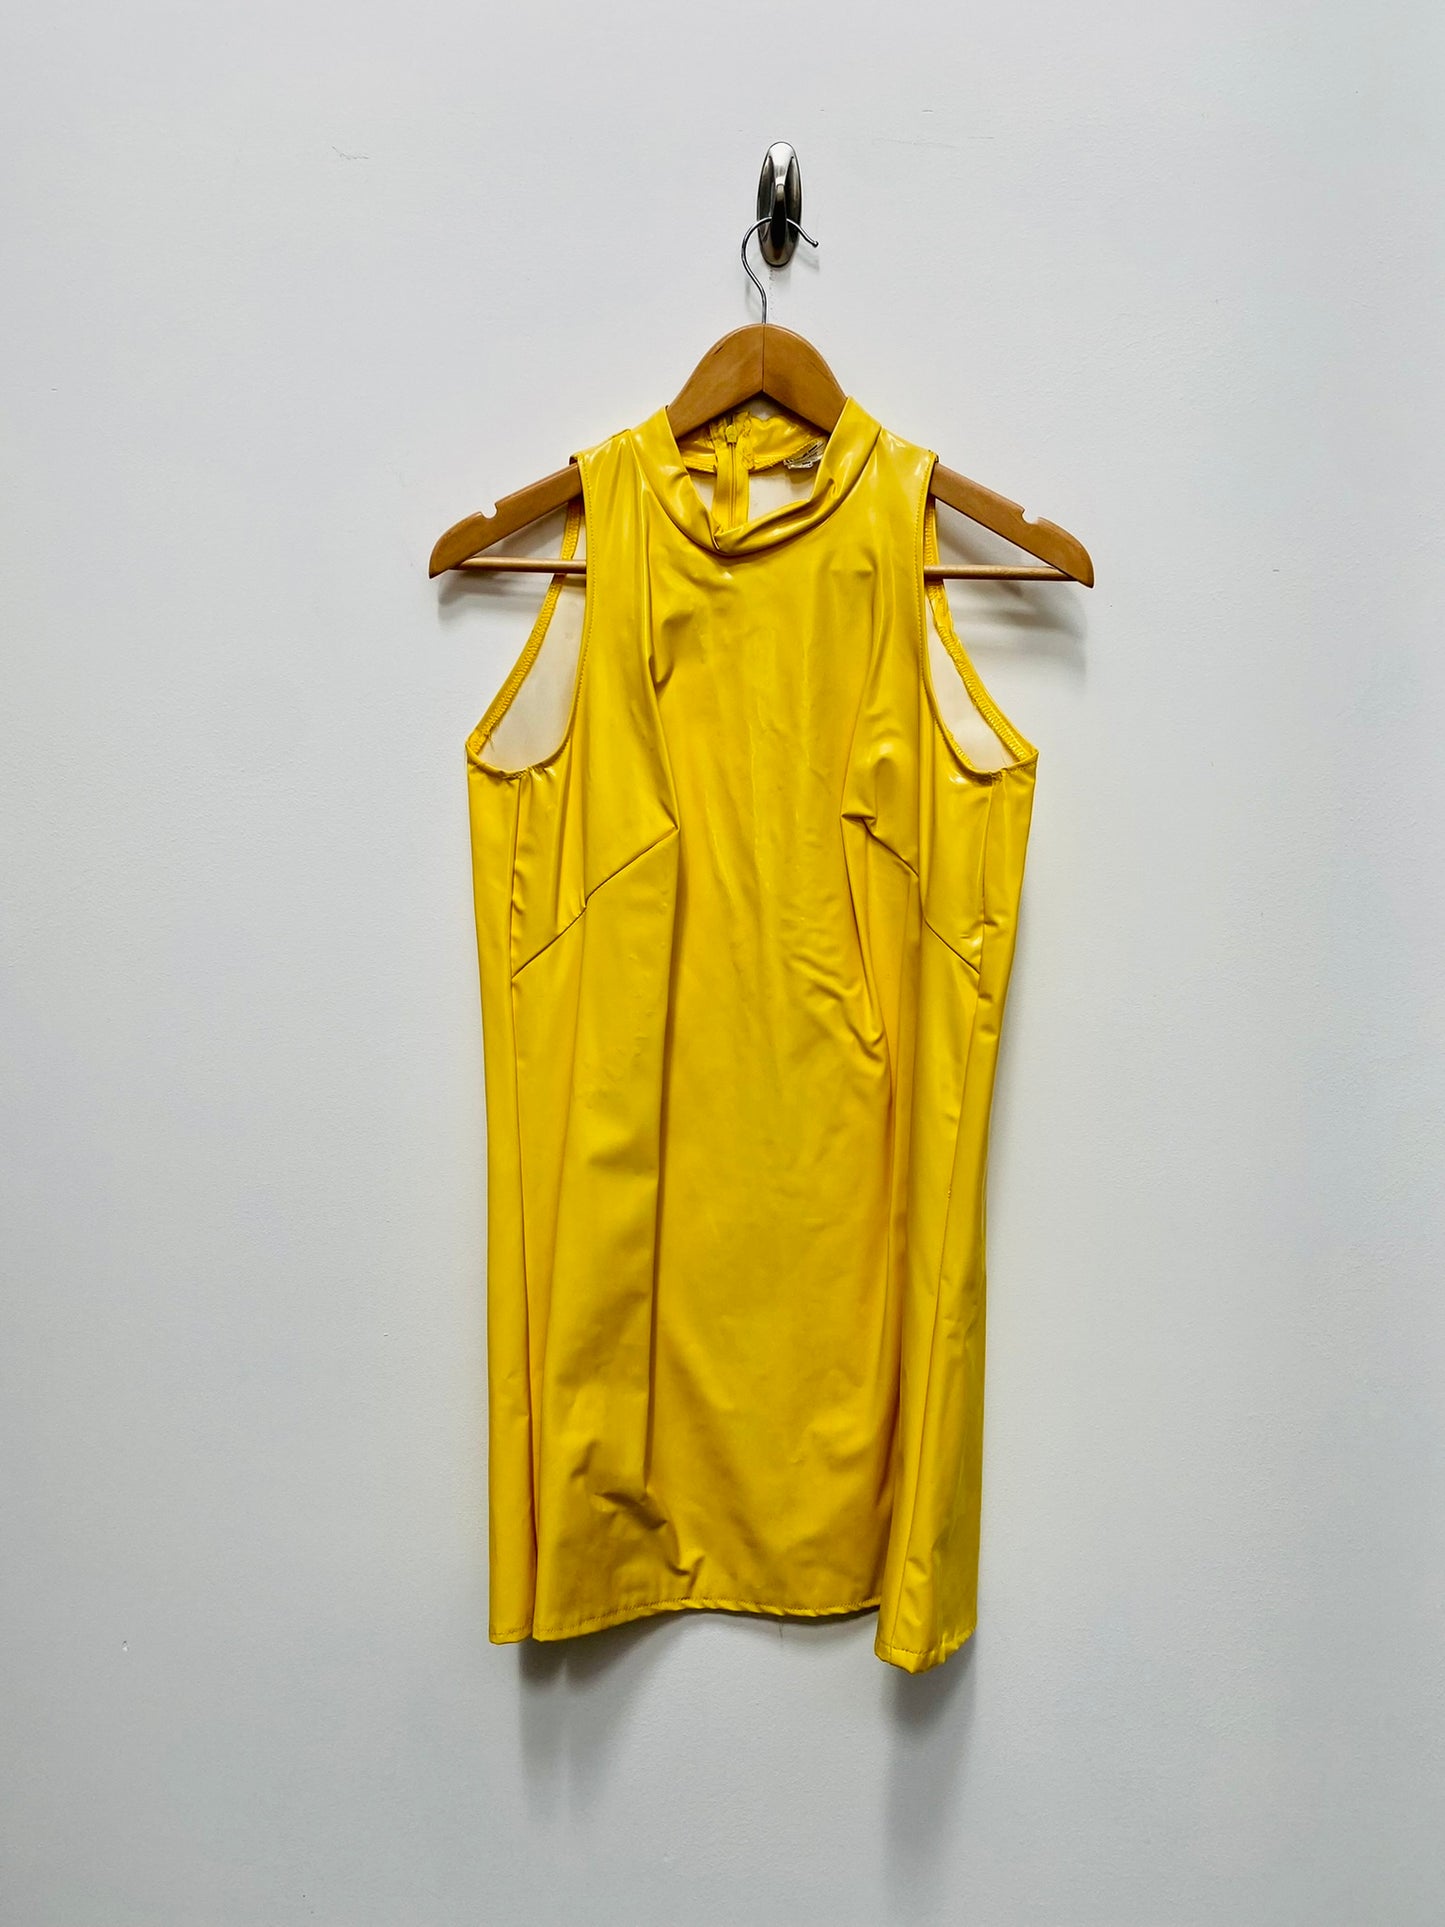 Yellow 60s-70s style mini PVC dress size 10 - Ex Hire Fancy Dress Costume